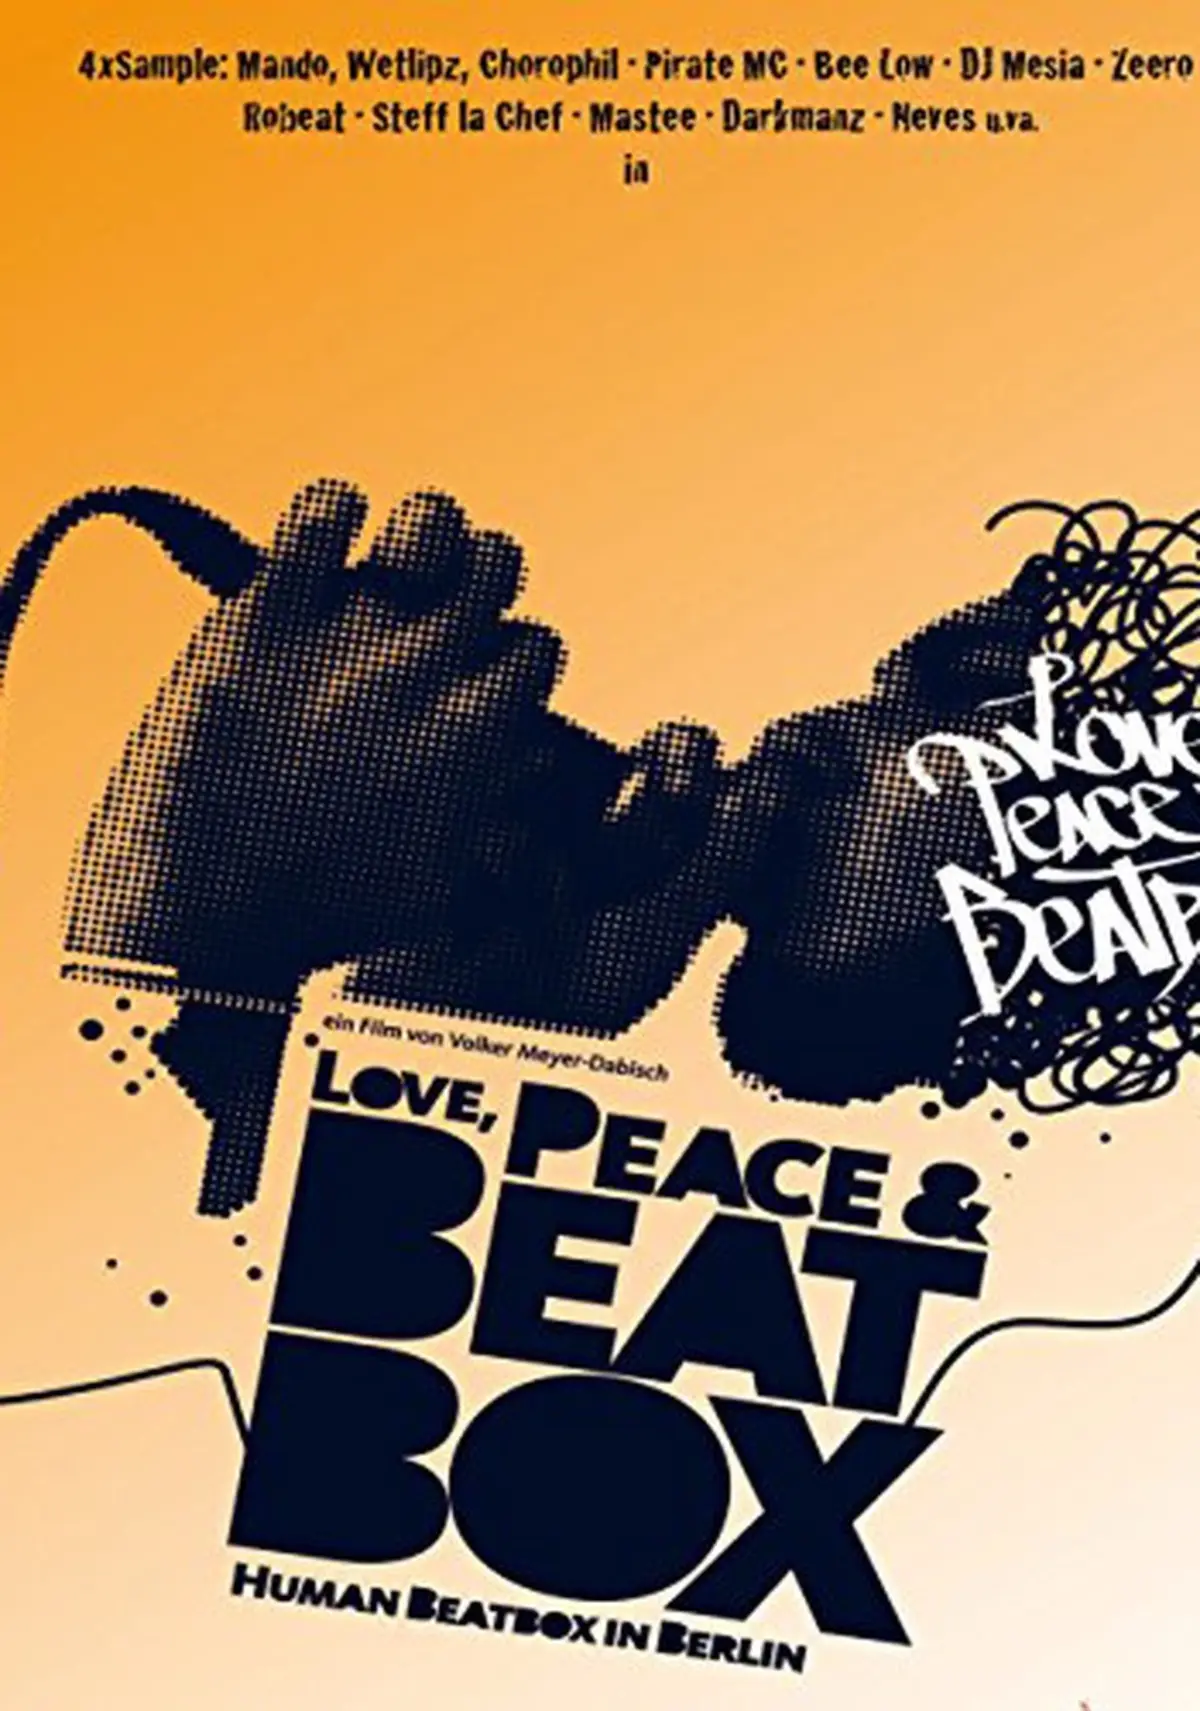 Love, Peace & Beatbox